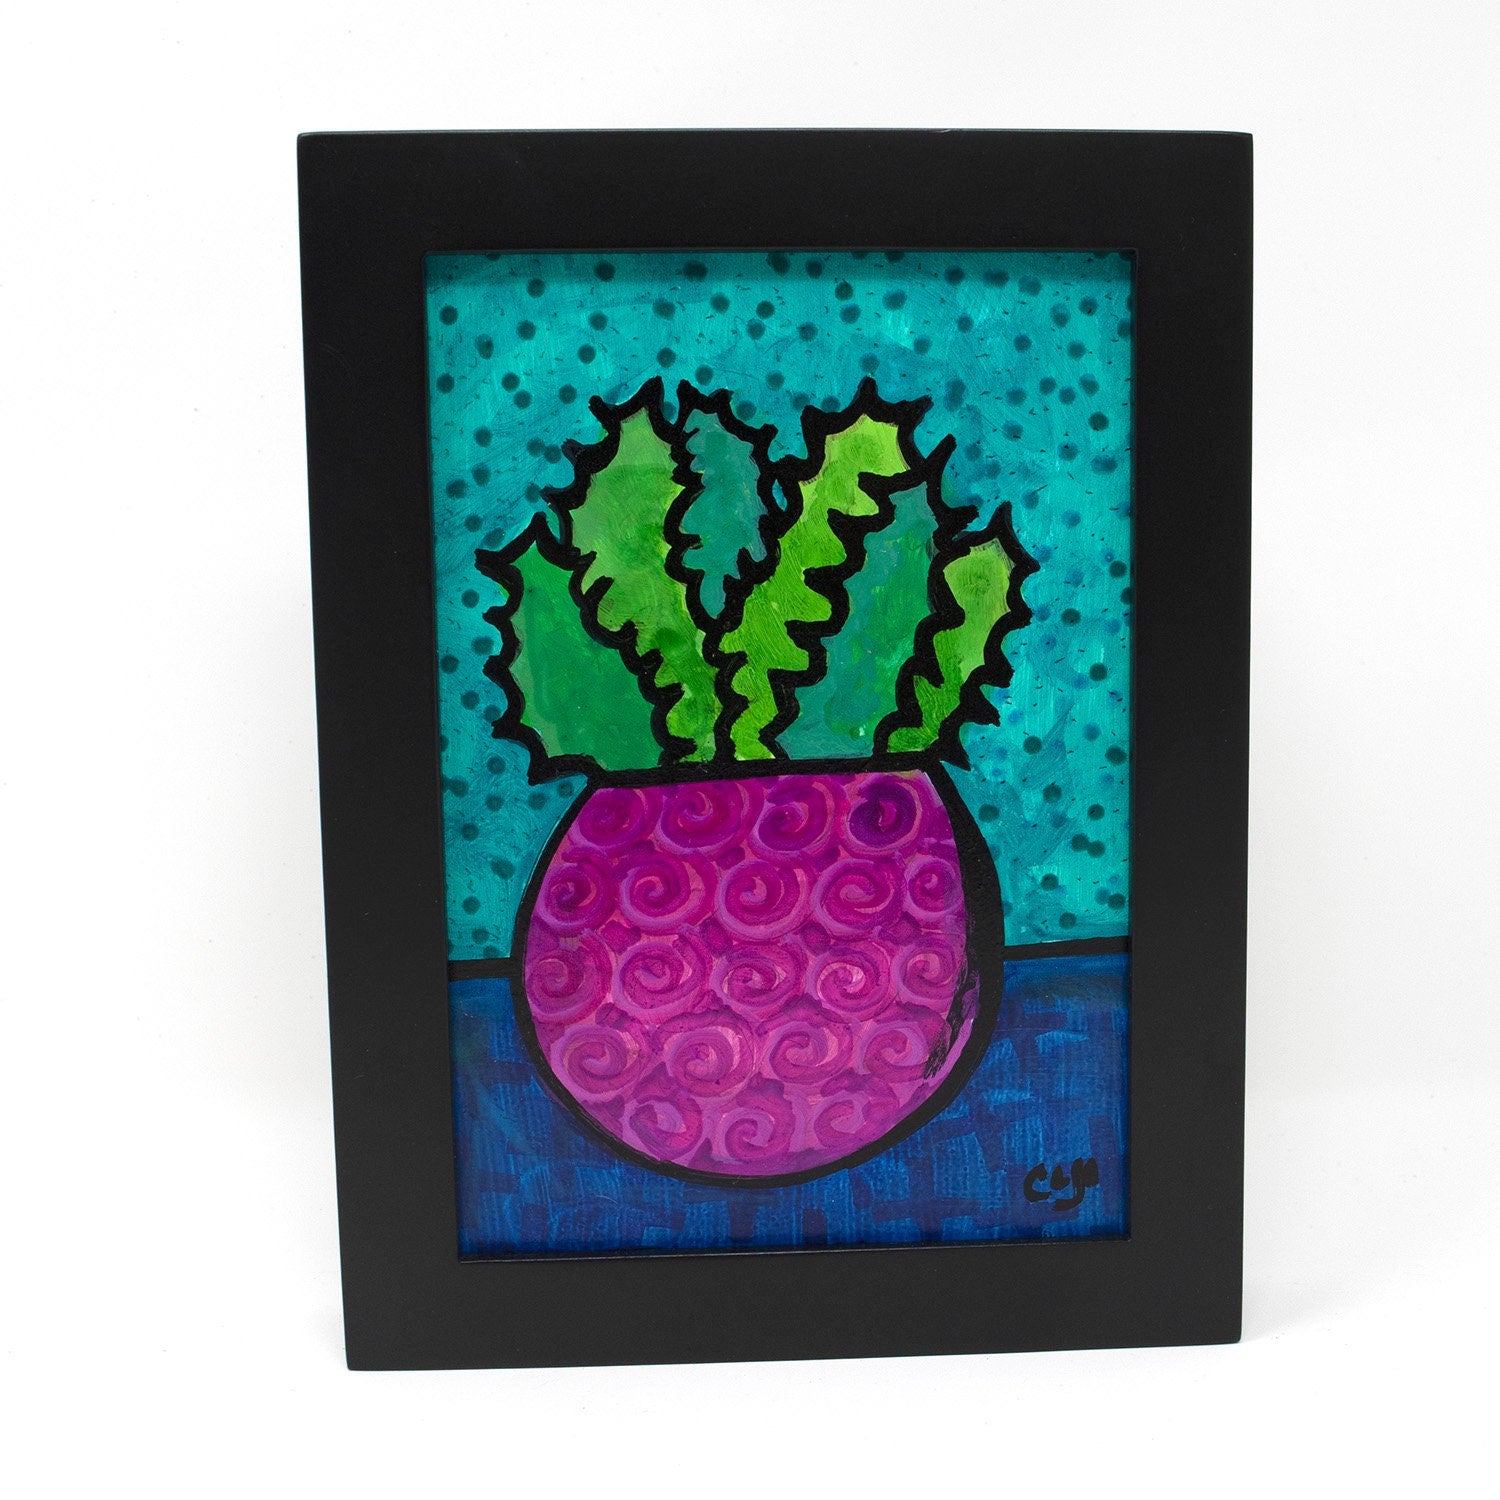 Colorful Succulent Art - Original Painting - Succulent Still Life - Bright Colors - Succulent Lover Gift